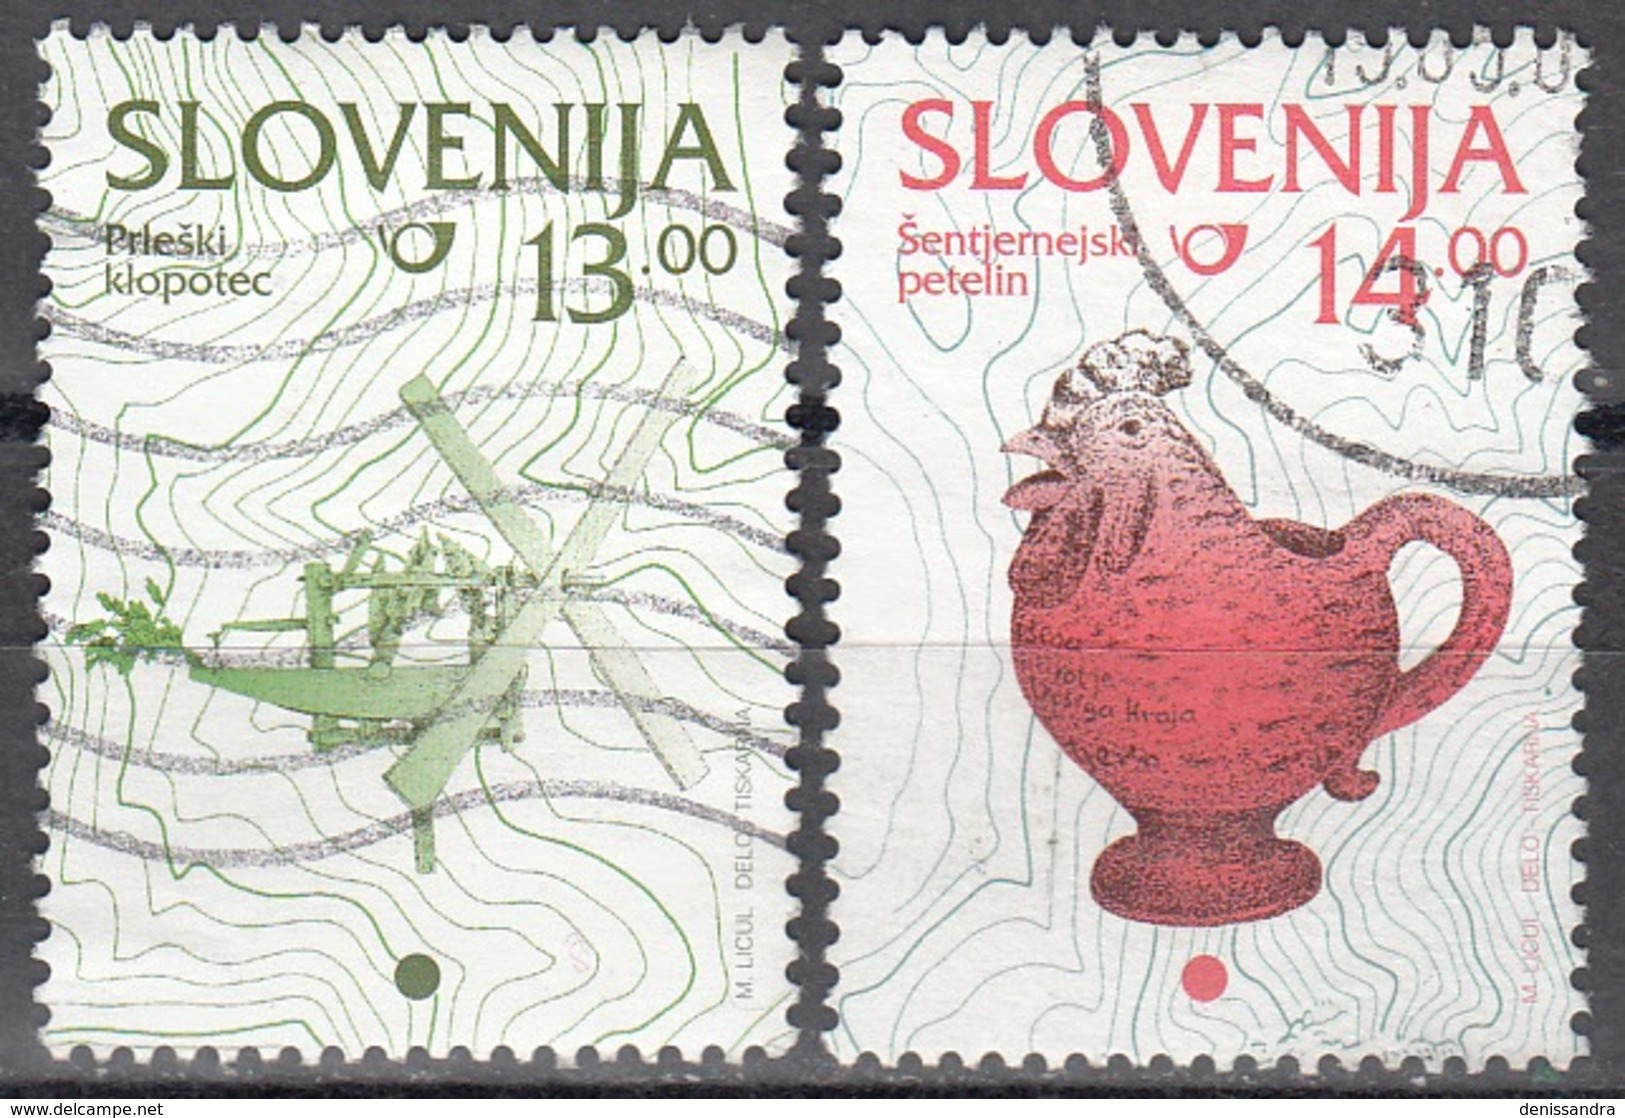 Slovenija 1997 Michel 204 - 205 O Cote (2006) 0.50 Euro Epouvantail Et Cruche De Vin Cachet Rond - Slovénie